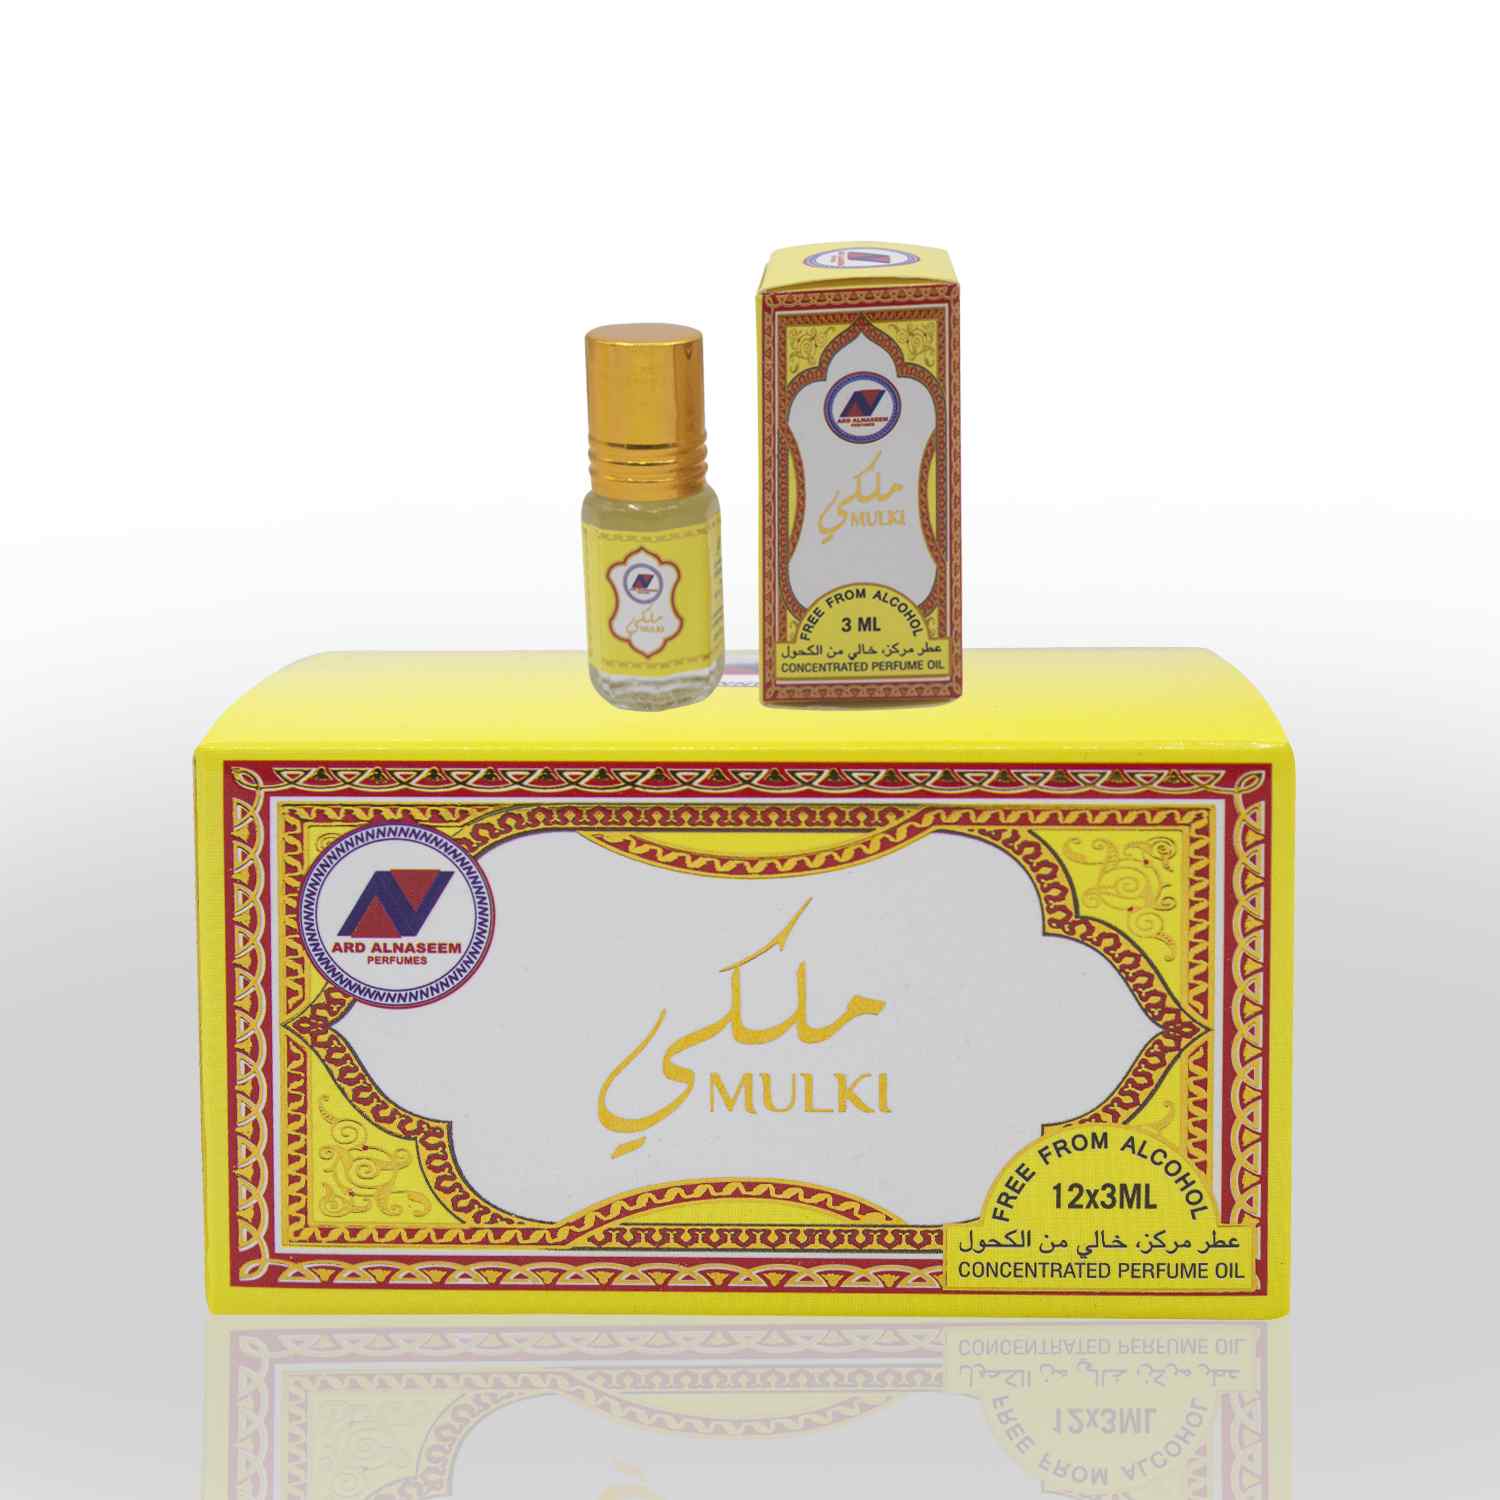 Mulki-3ml-Rollan-Attar-by-ARD-perfumes